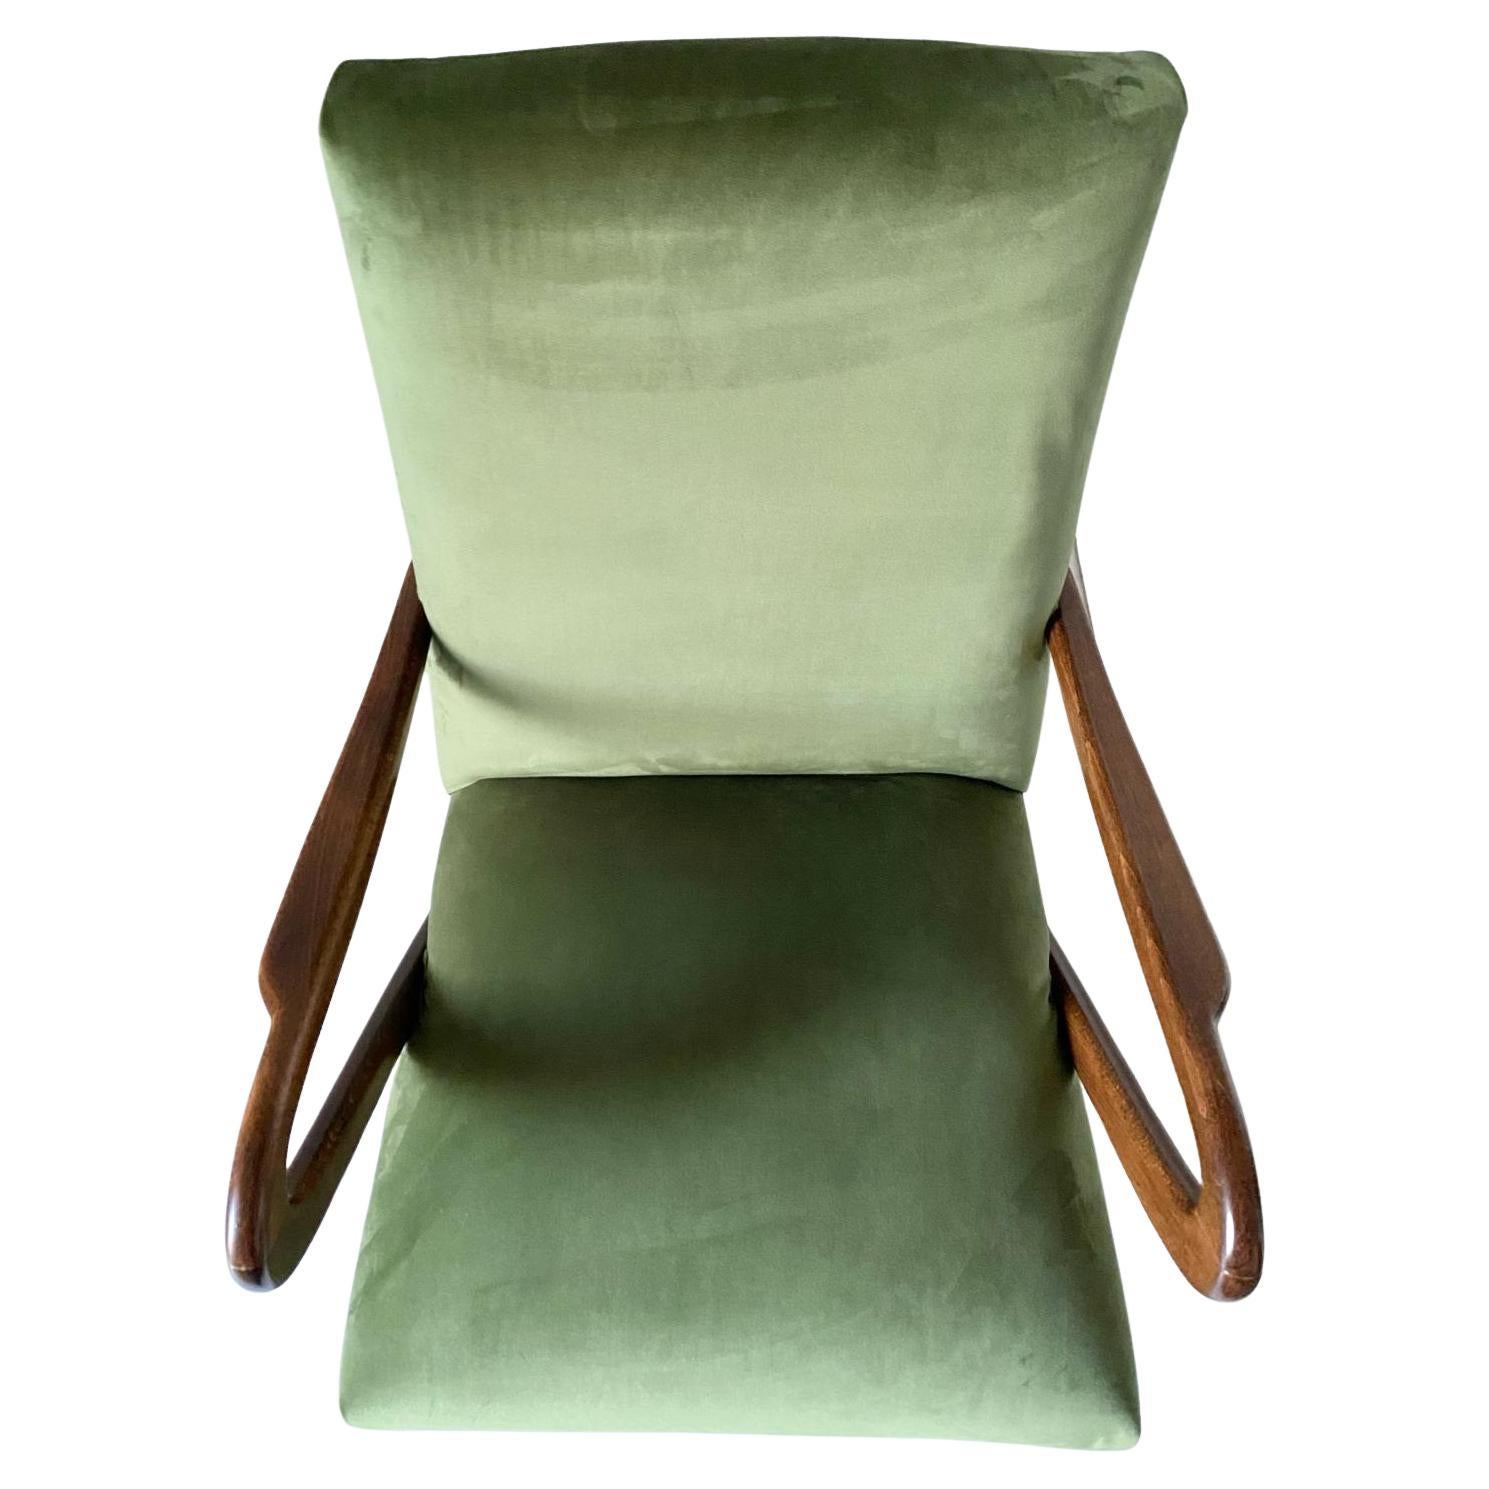 Mid-20th Century Midcentury modern Green Velvet Armchair, Guglielmo Ulrich, Italy 1950 's